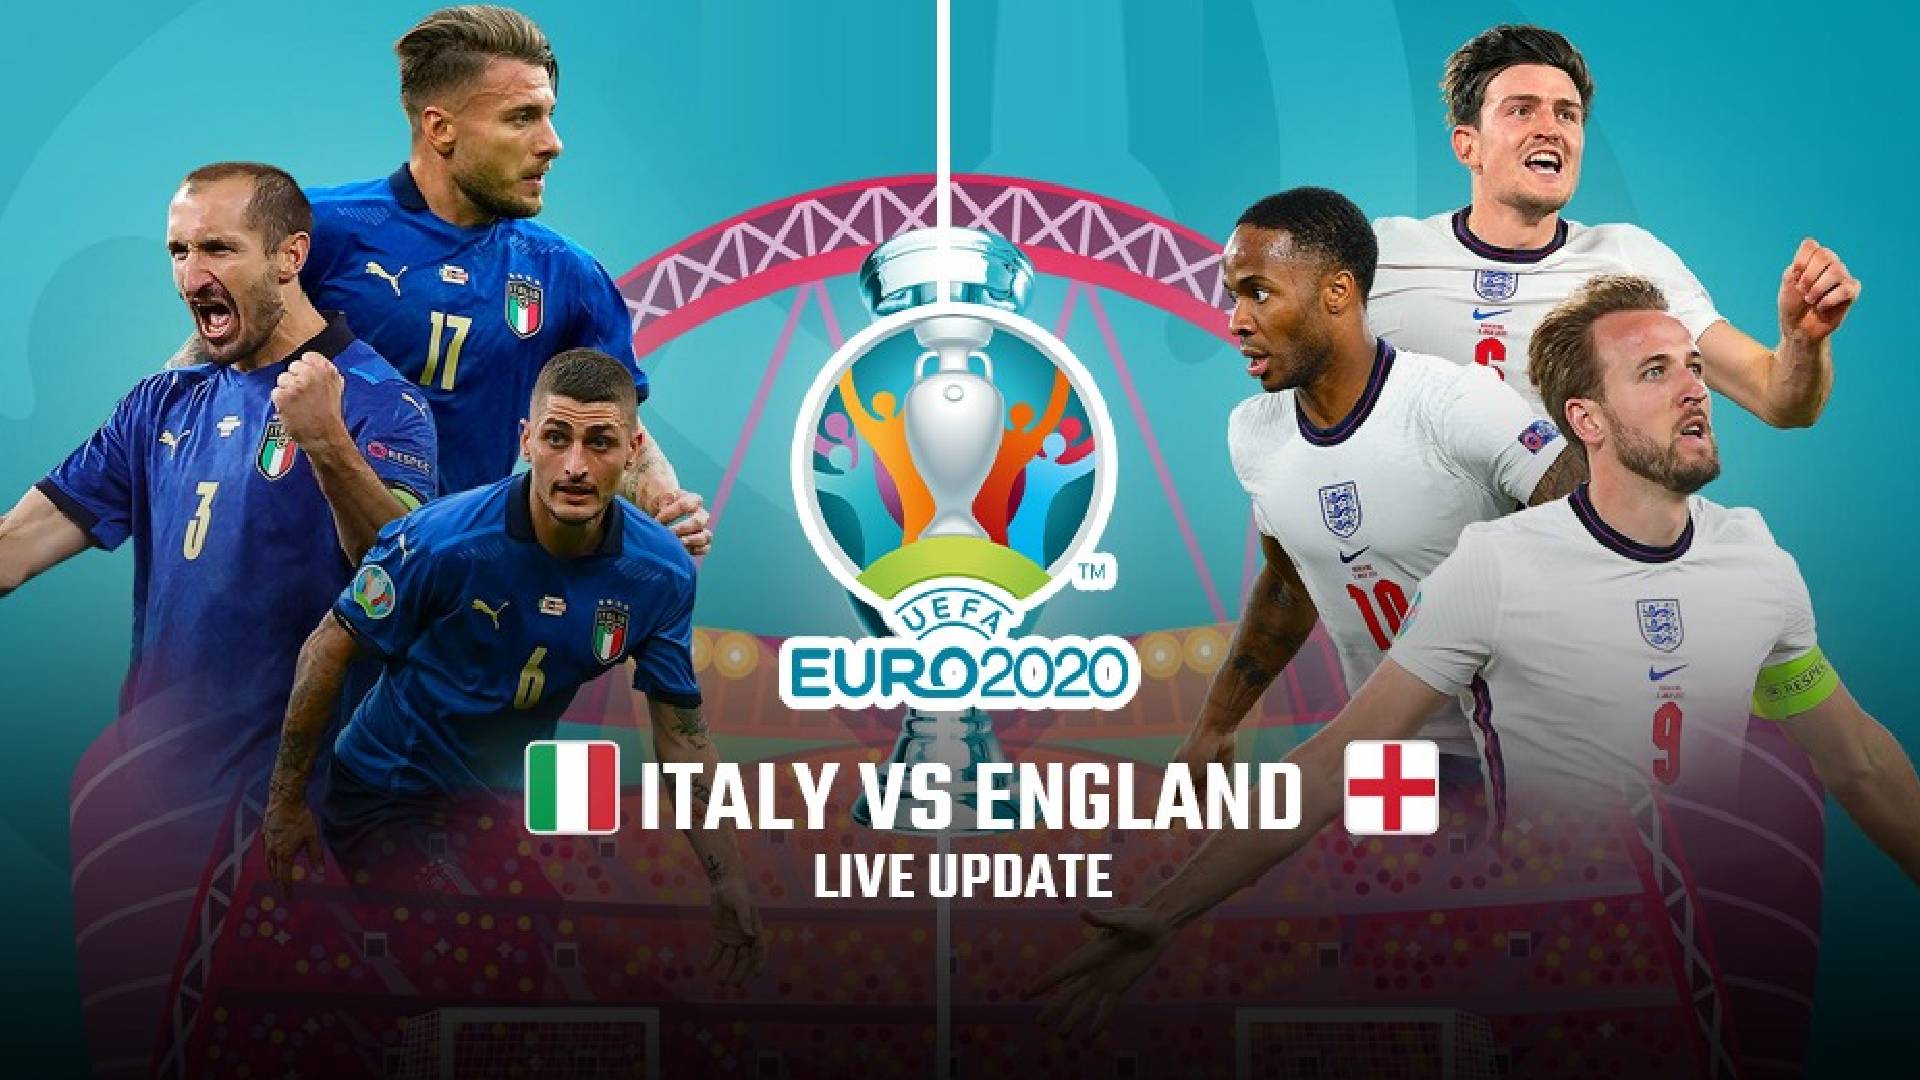 italy vs england live update Siaran Langsung (Blog) Euro 2020: Italy vs England Live Streaming Blog + Team News